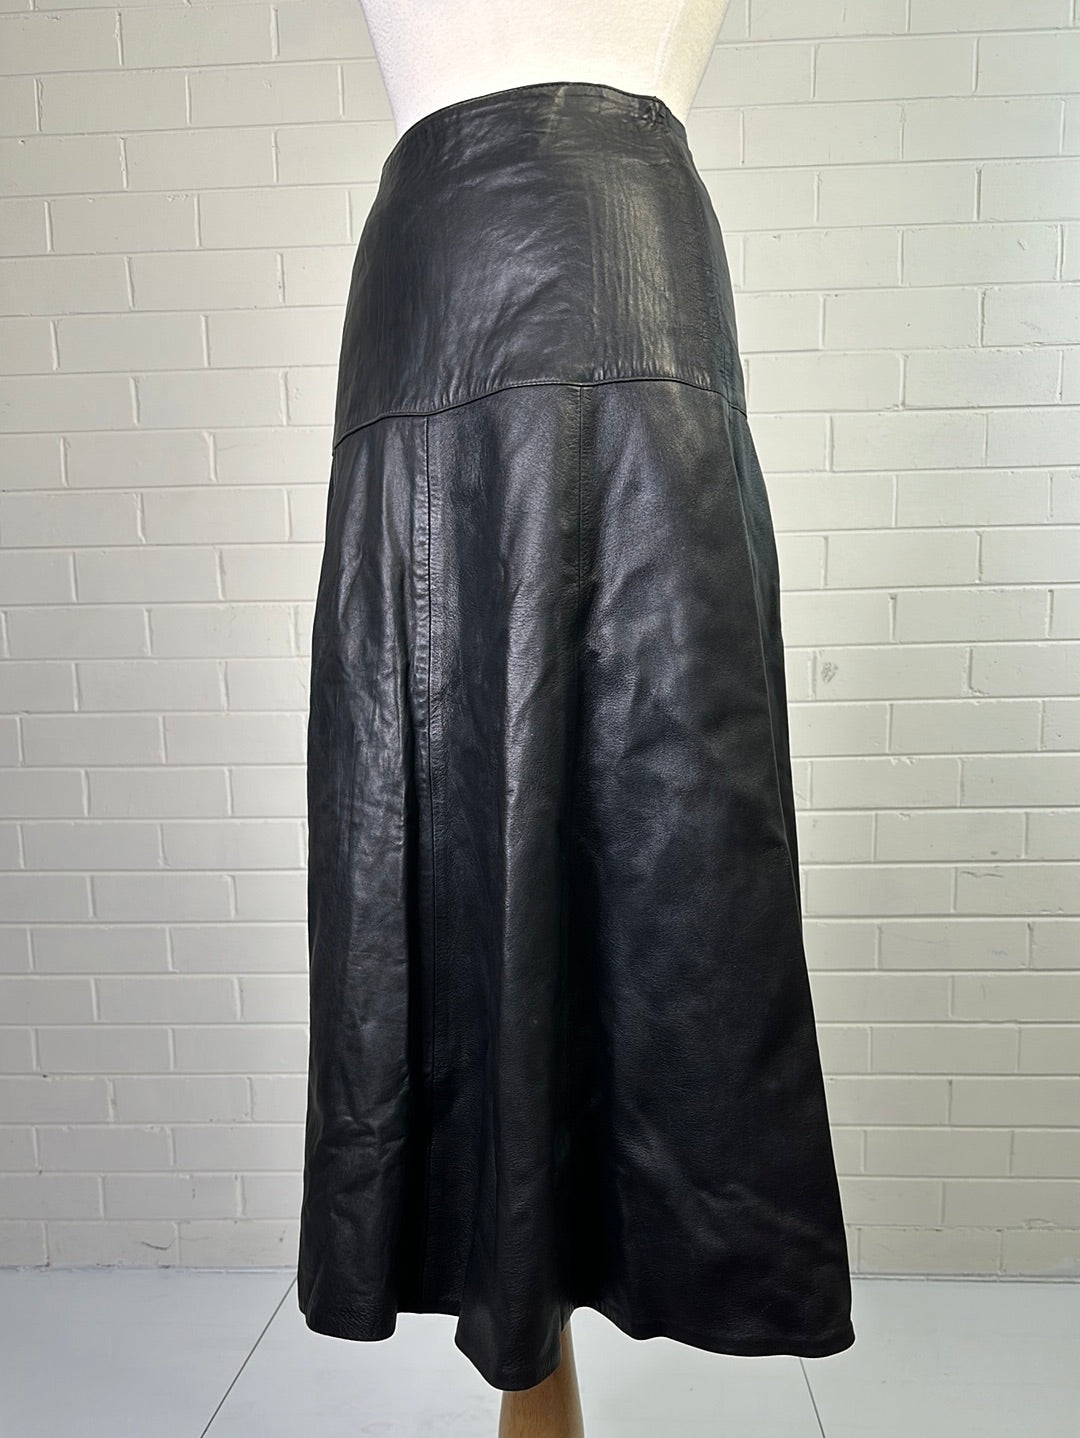 Jake Palerues | vintage 80's | skirt | size 10 | midi length | 100% leather